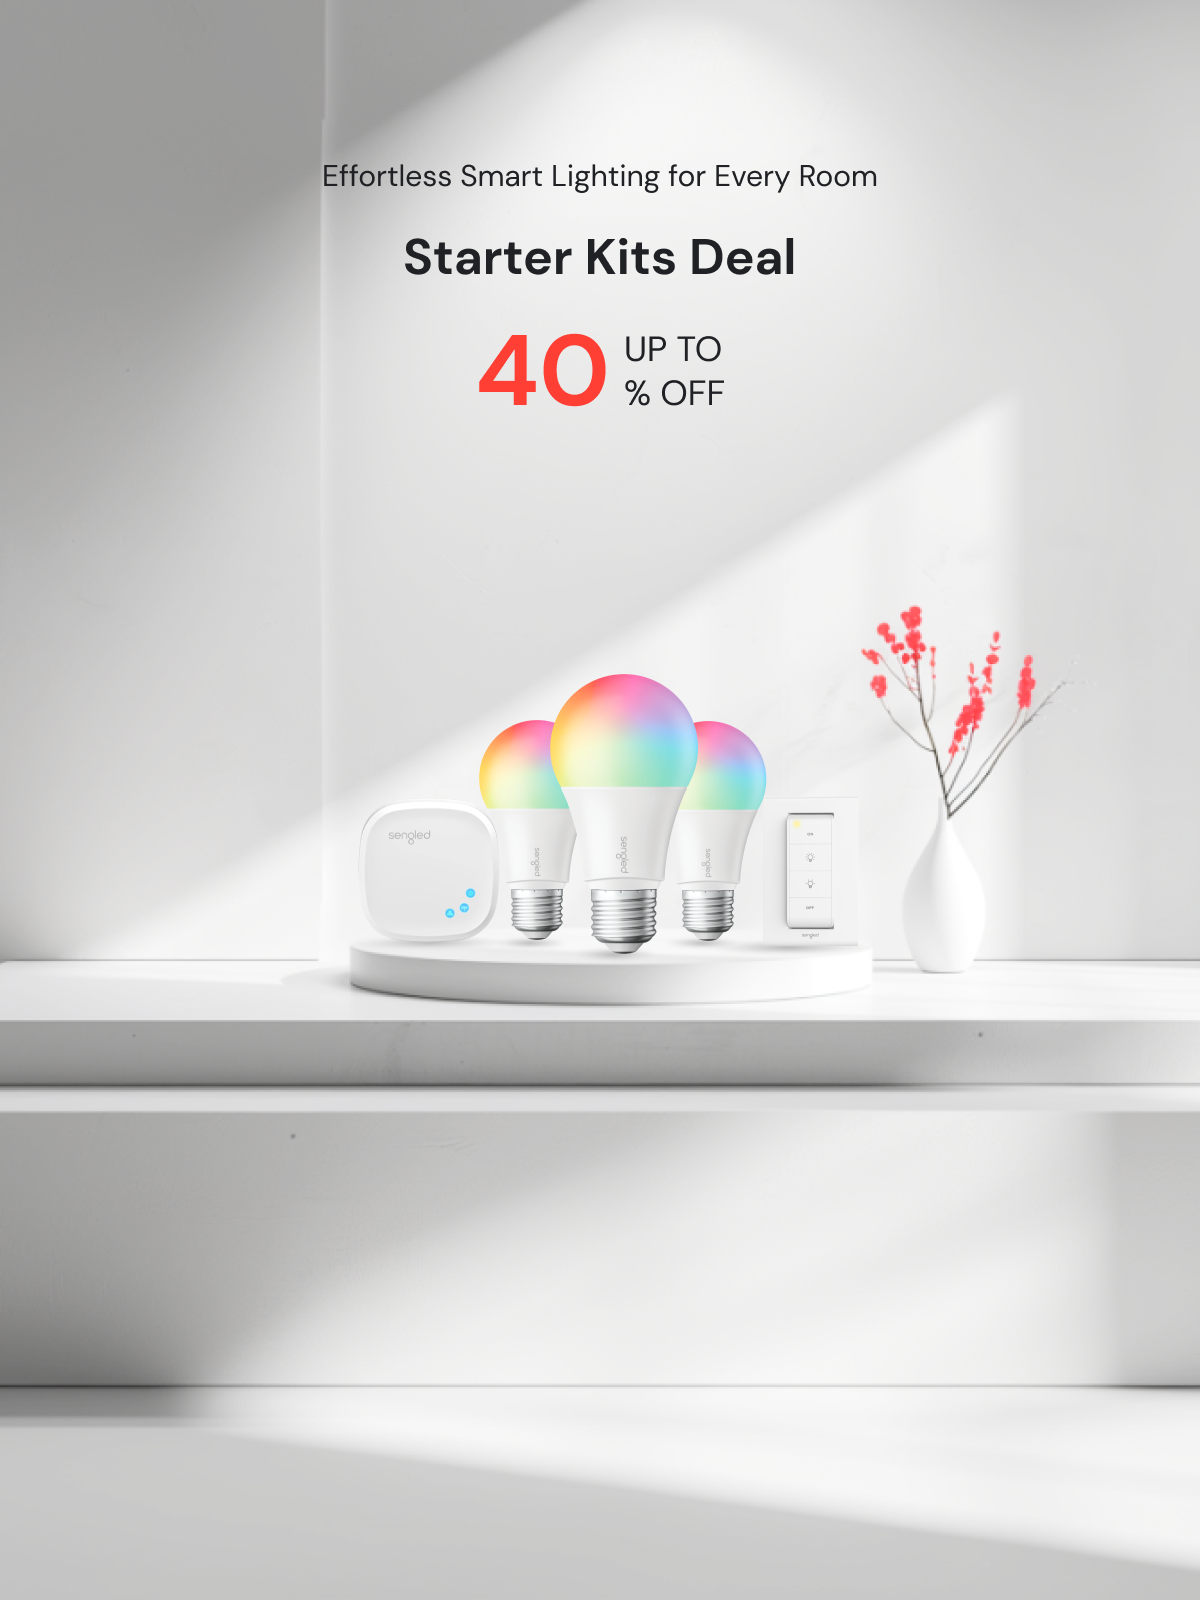 Sengled Starter Kits Deal: Effortless Smart Lighting for Every Room. Up to 40% Off! Valid May 1-12